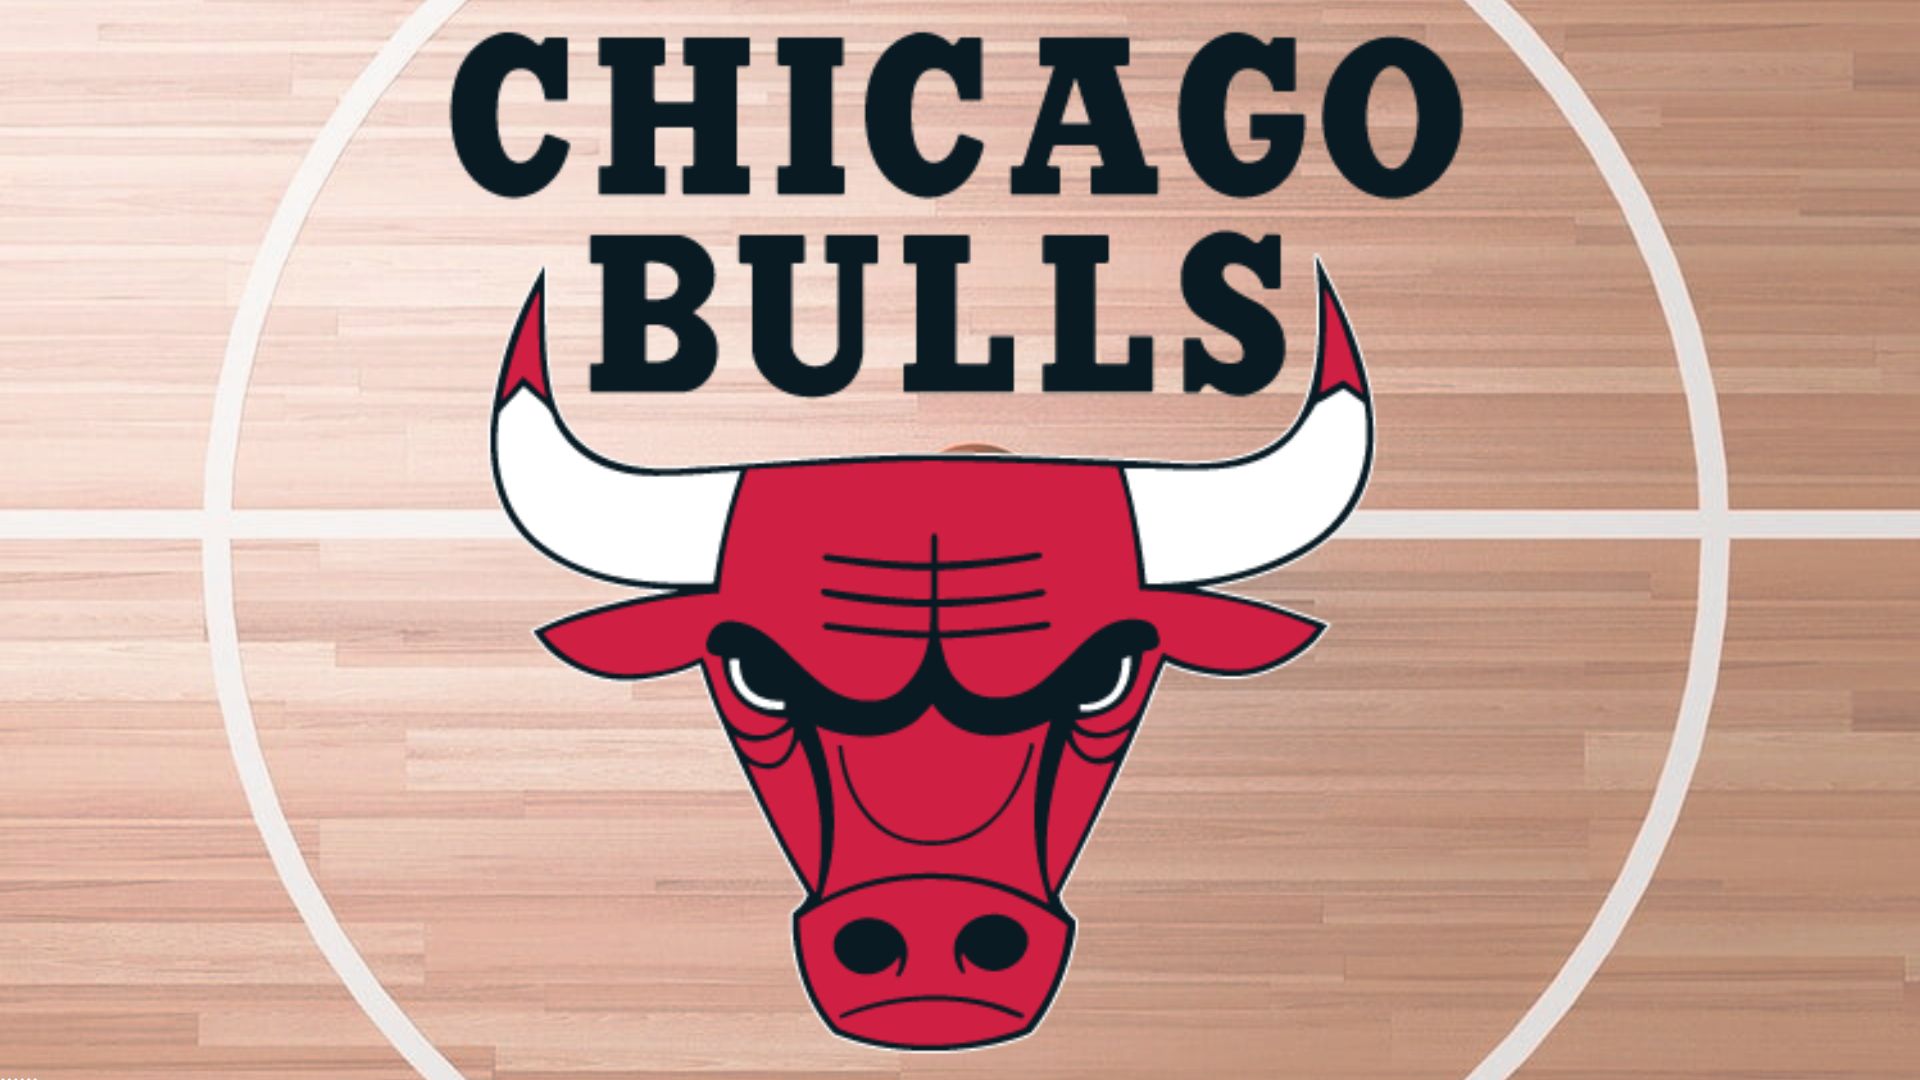 Chicago Bulls, Billy Donovan III additionally arrives